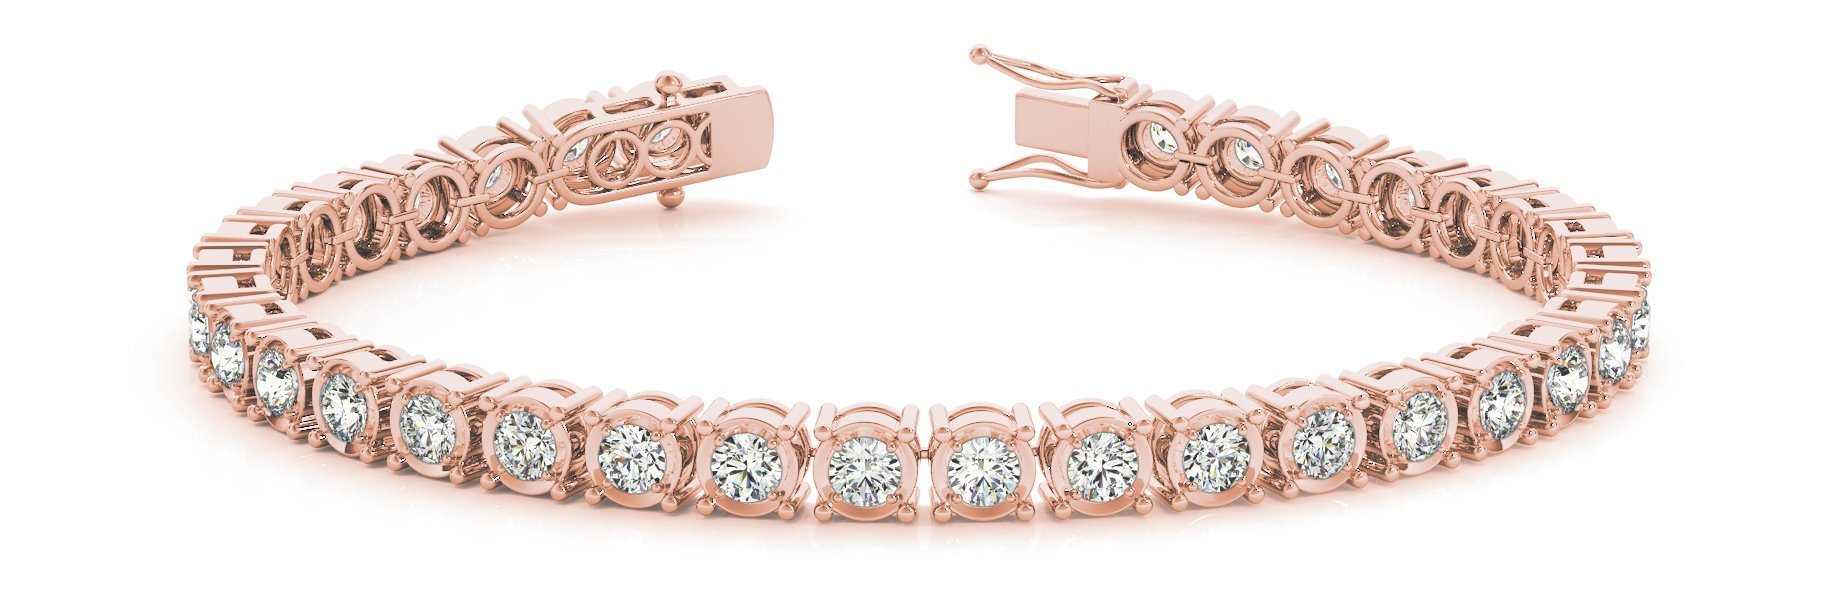 Fancy Diamond Bracelet Ladies 3.74ct tw - 14kt Gold